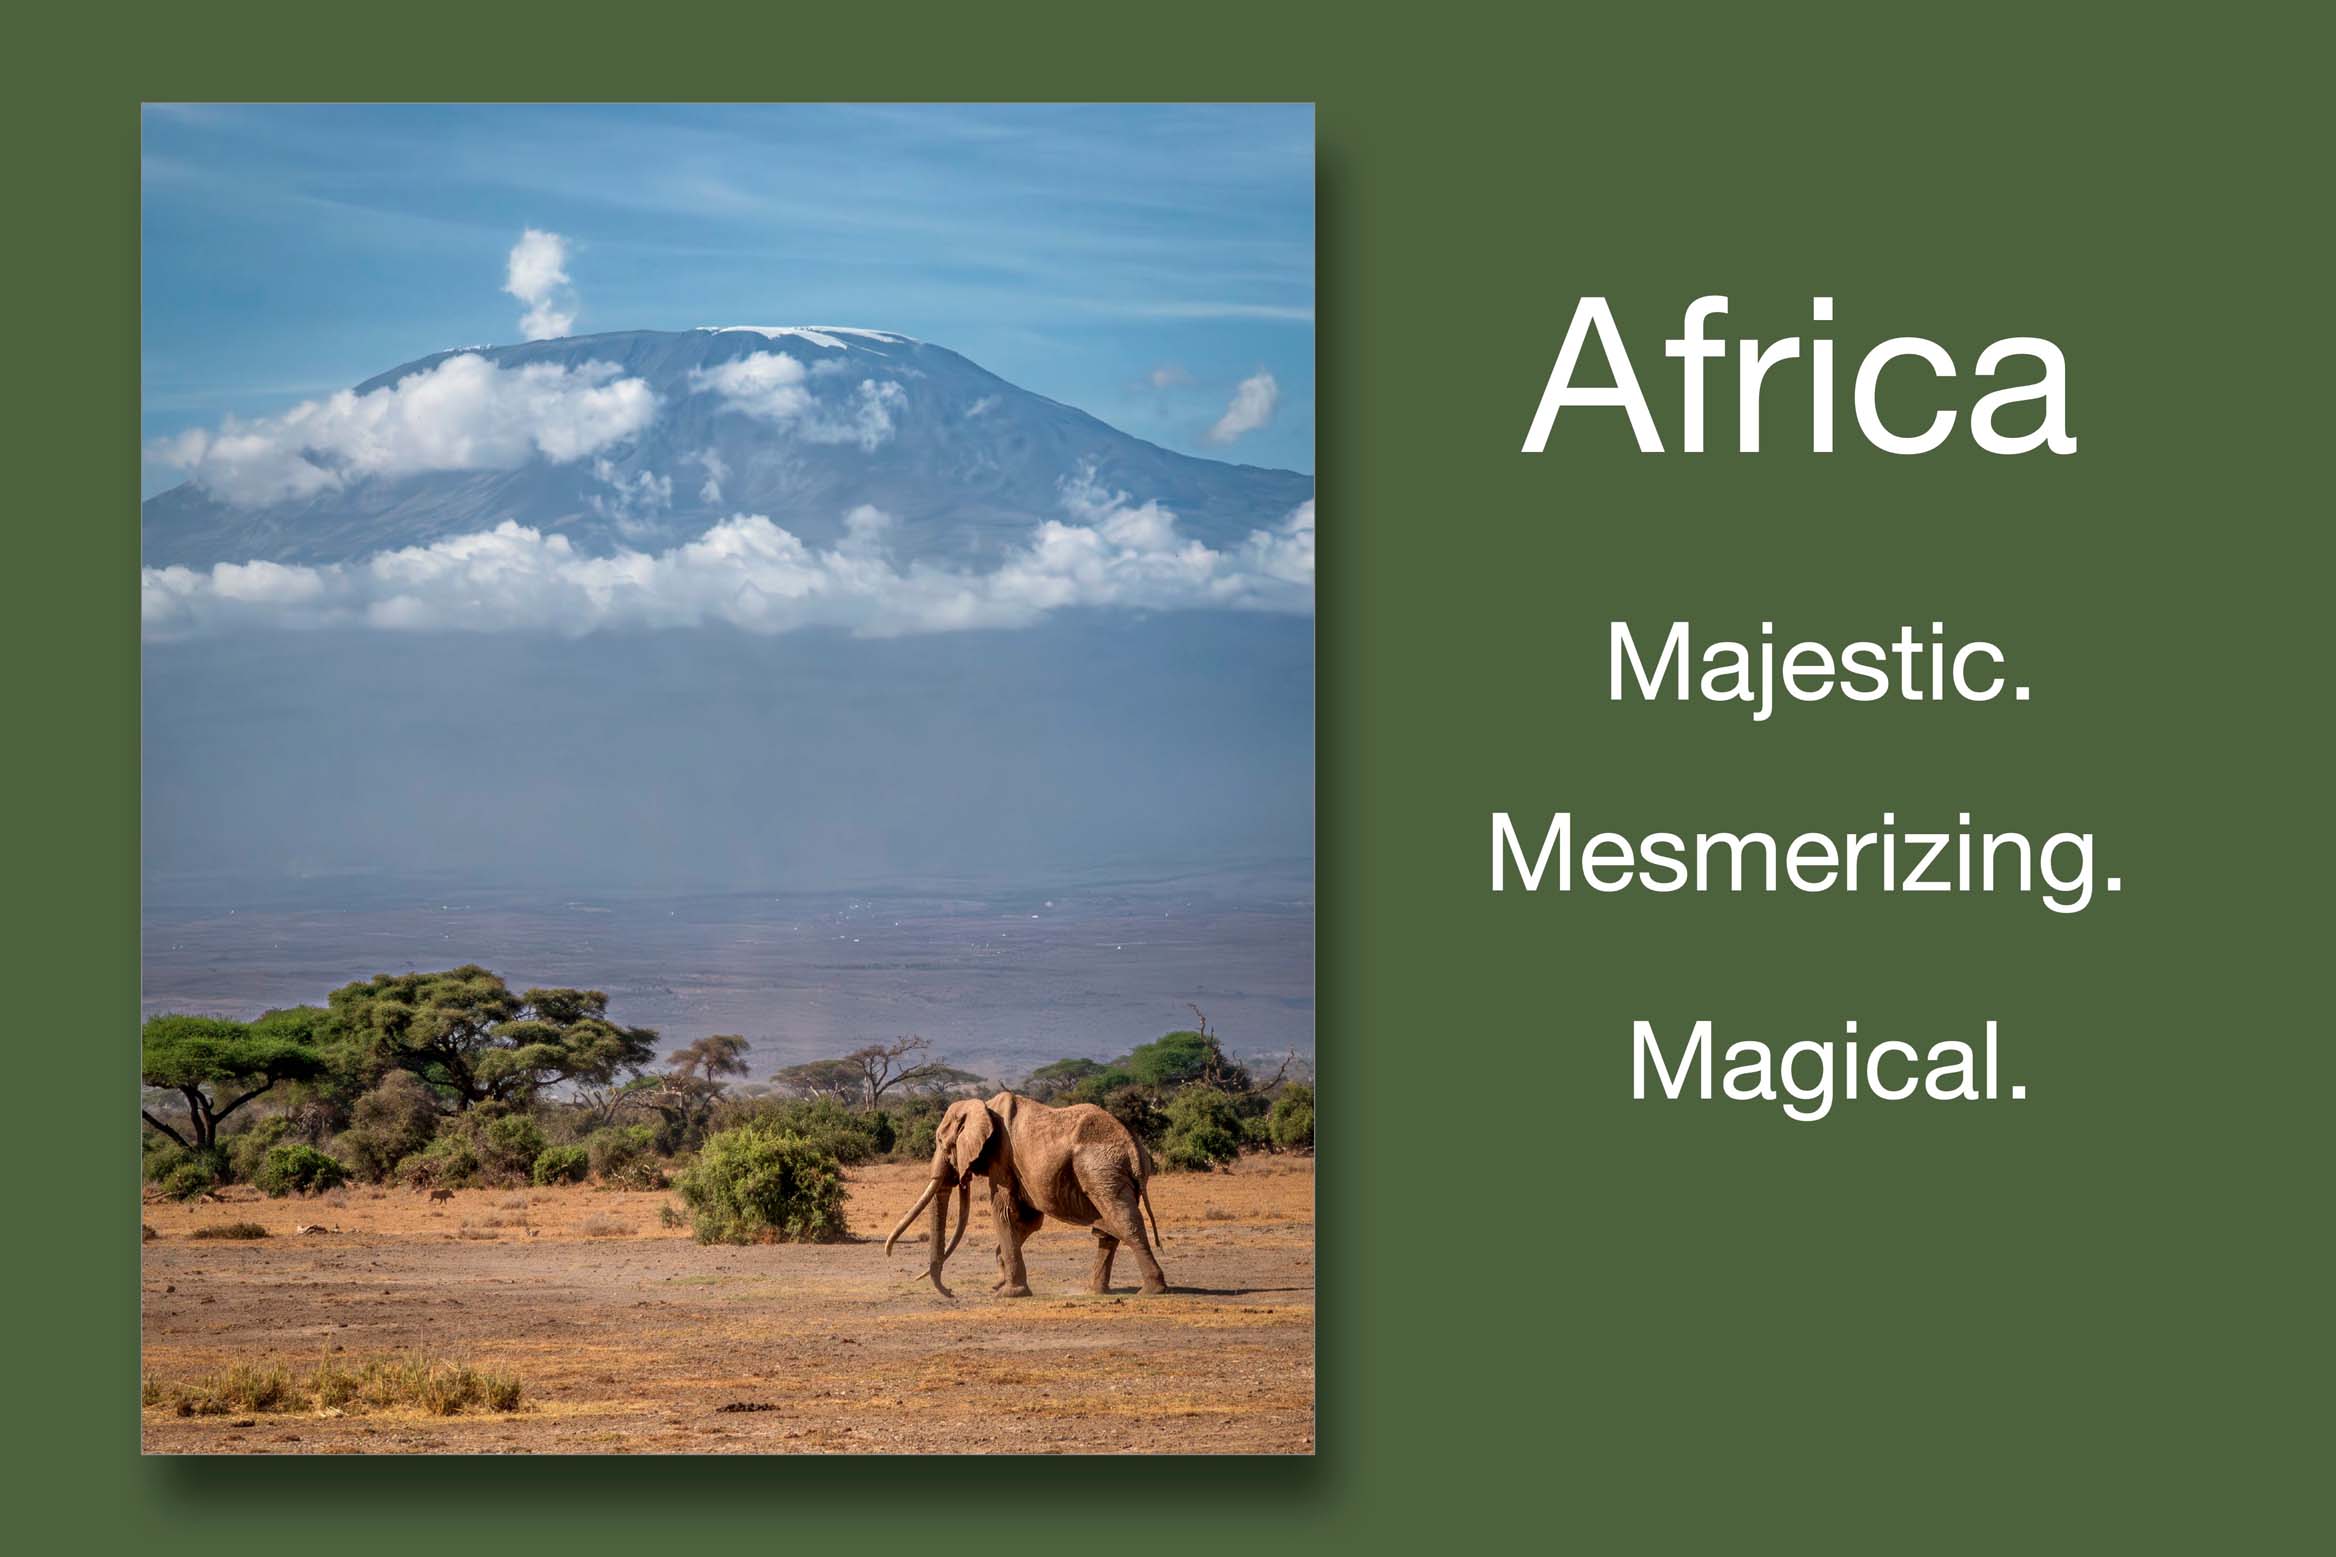 ebook_africa_landscape.jpg